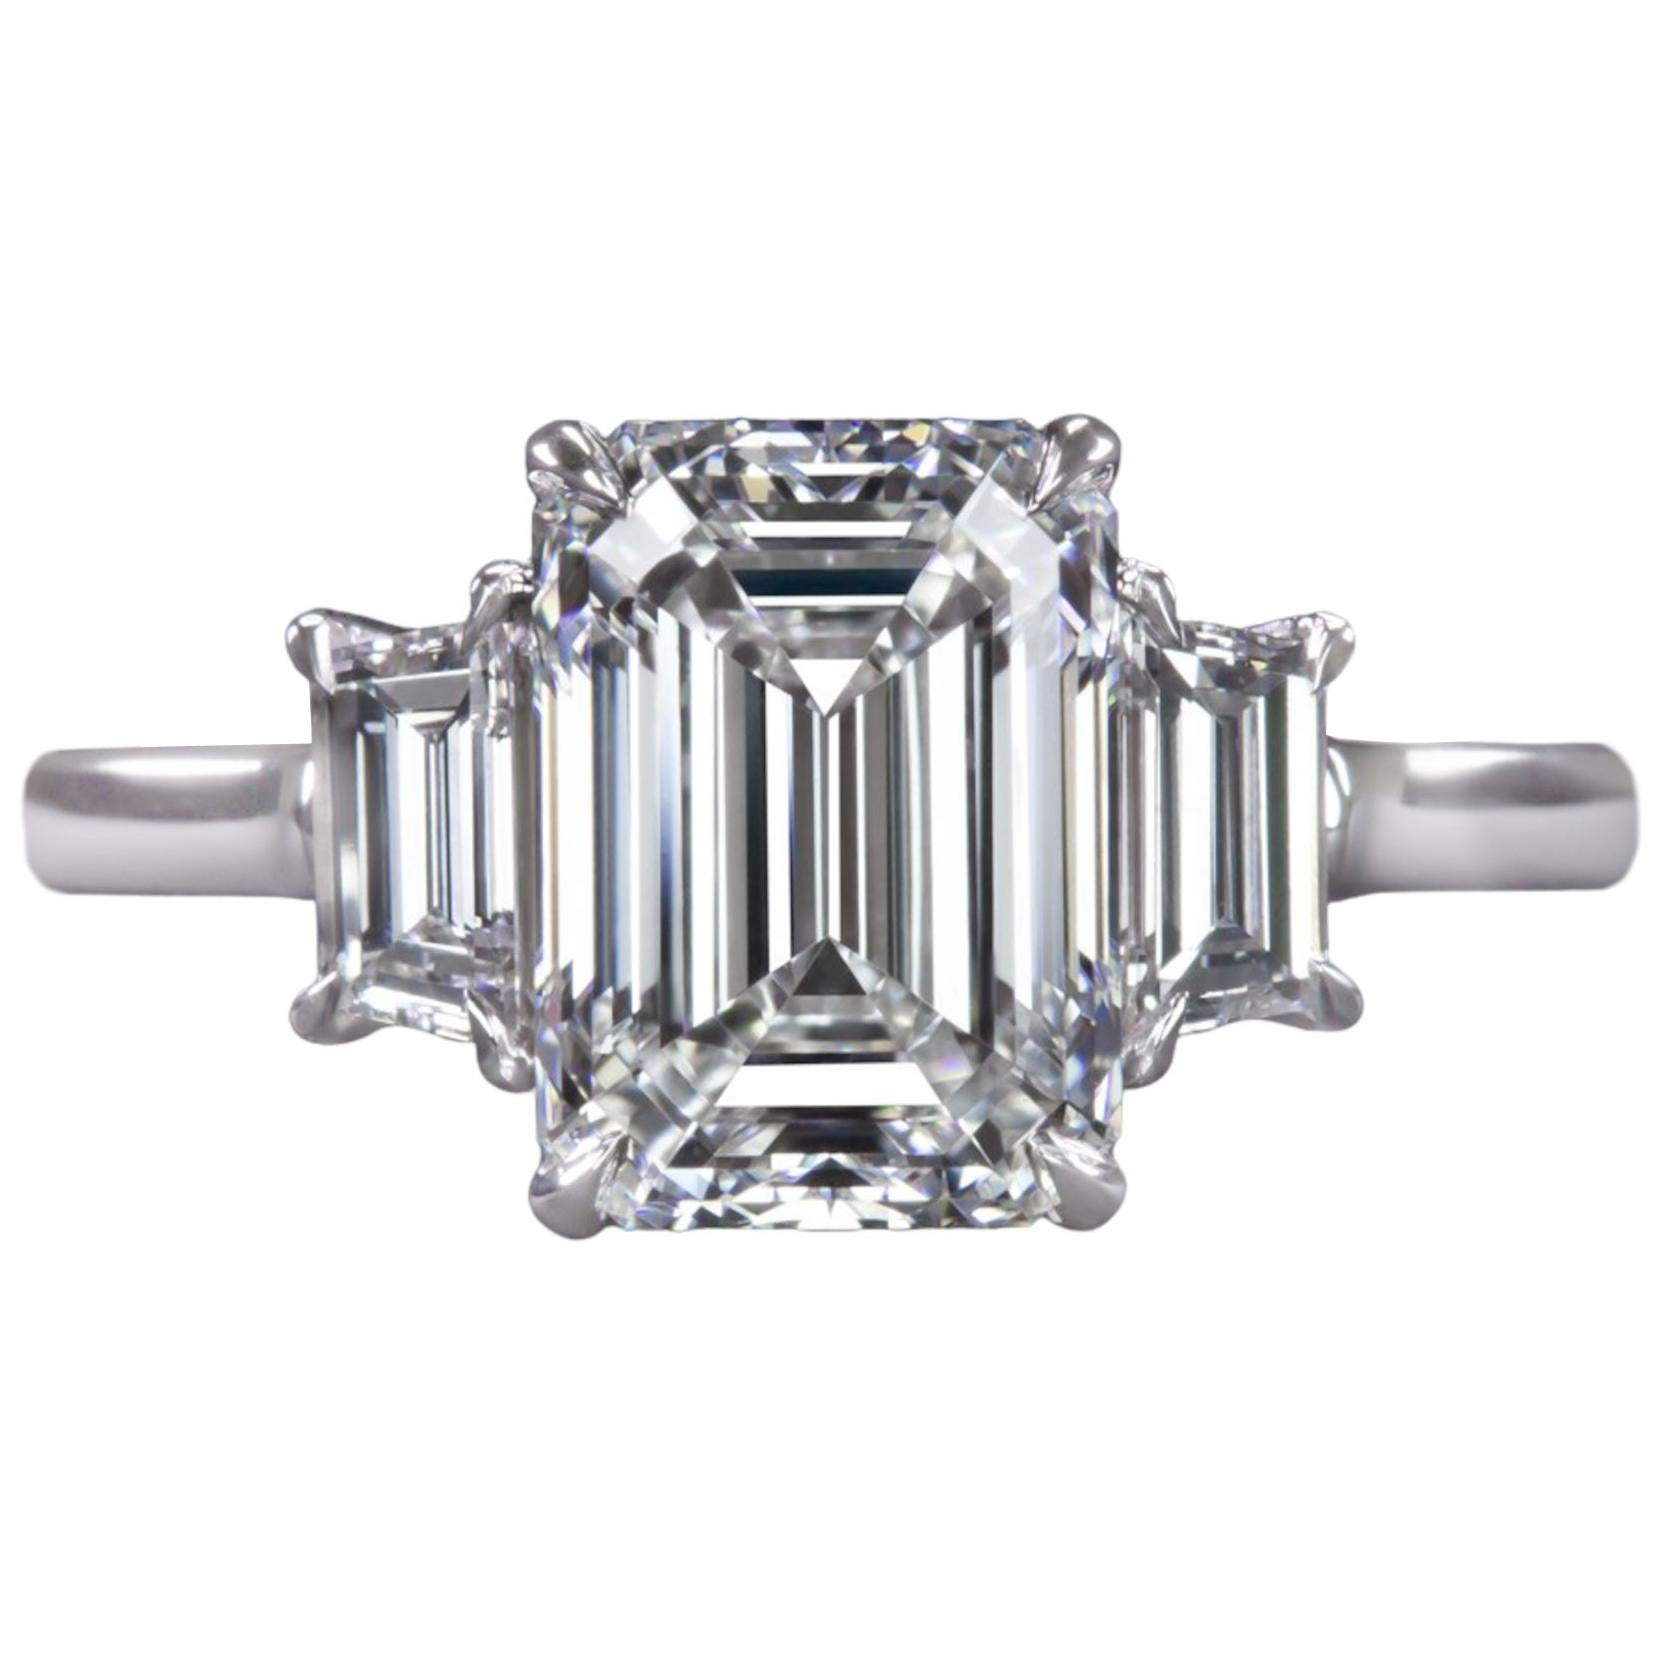 3ct emerald cut diamond ring